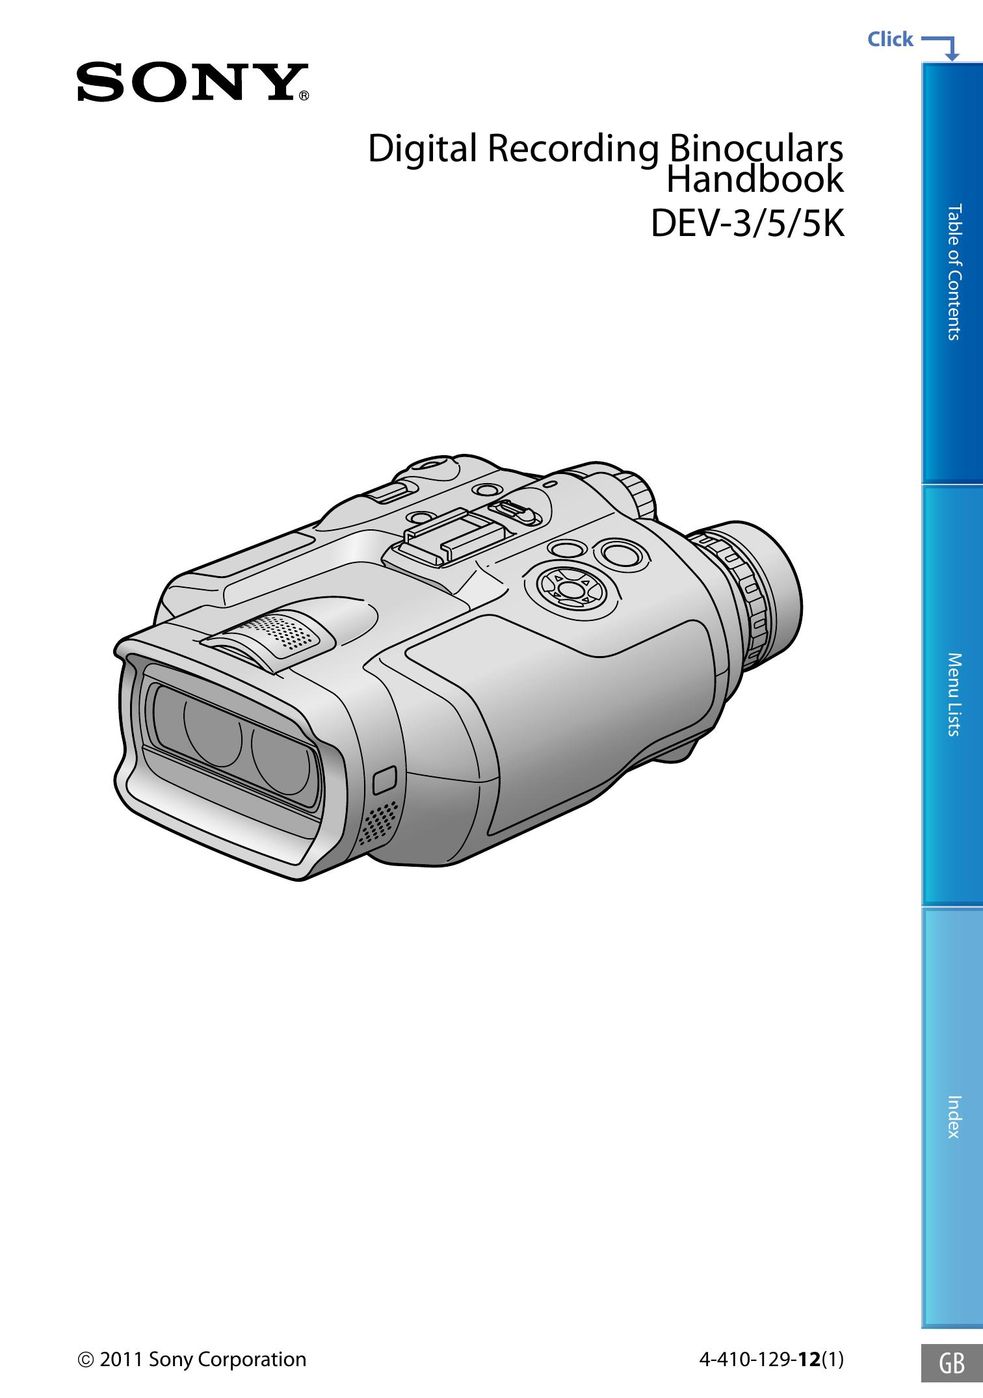 Sony DEV-3 Binoculars User Manual